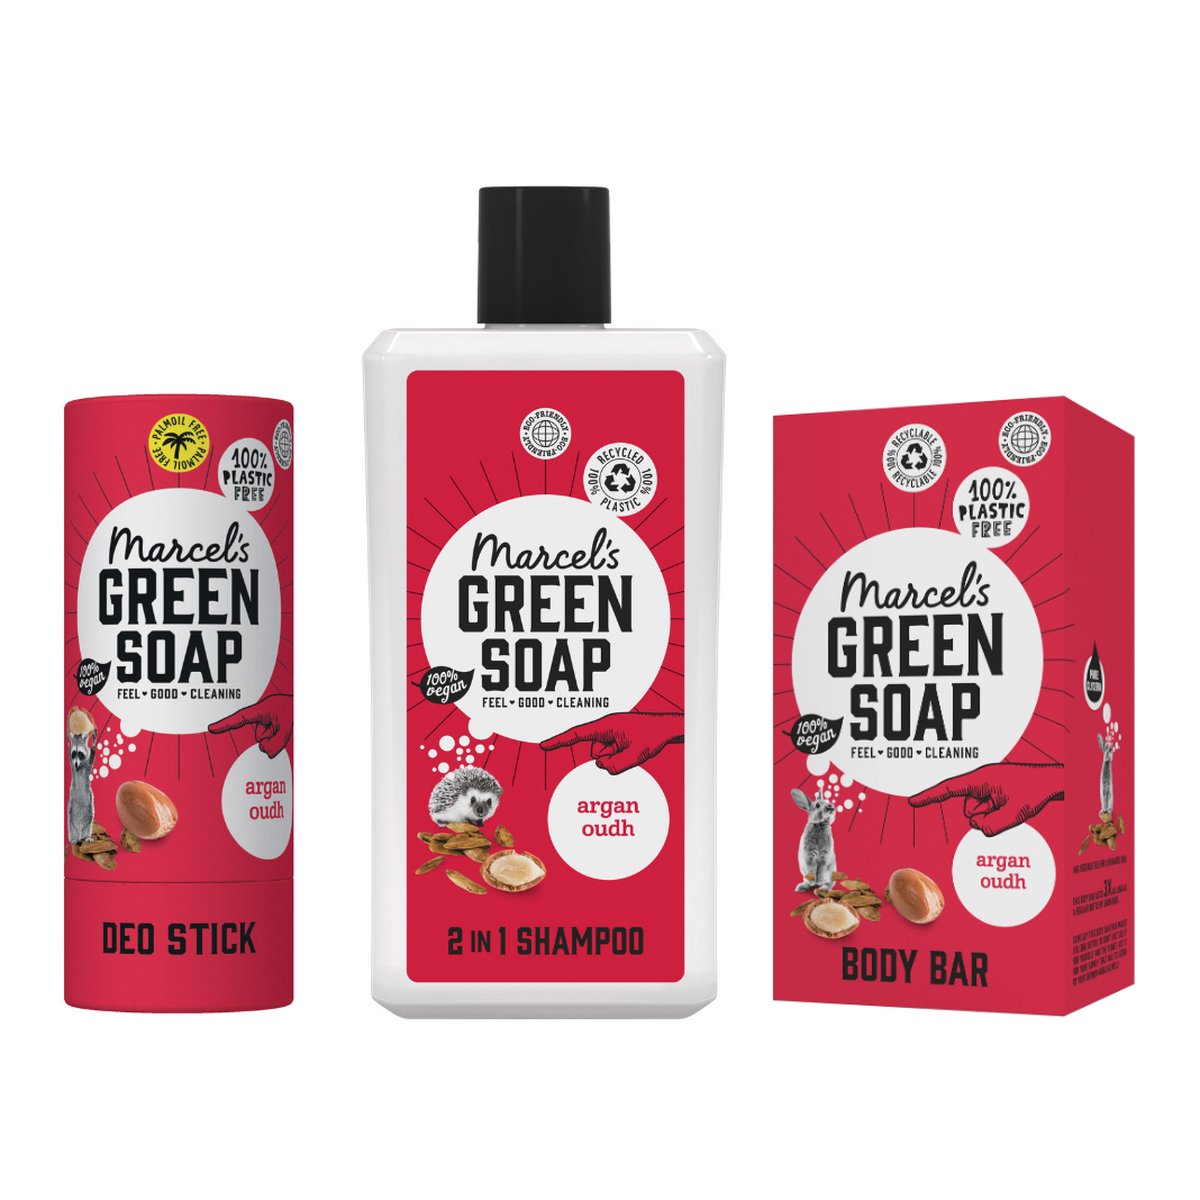 Marcel's Green Soap - Fris & Fruitig Pakket (Argan & Oudh) / Geschenkset / Cadeau / Shampoo / Douchegel / Deodorant / Badkamer / Douche / Hygiene / Uiterlijk / Verzorging / Ecologisch / Vegan